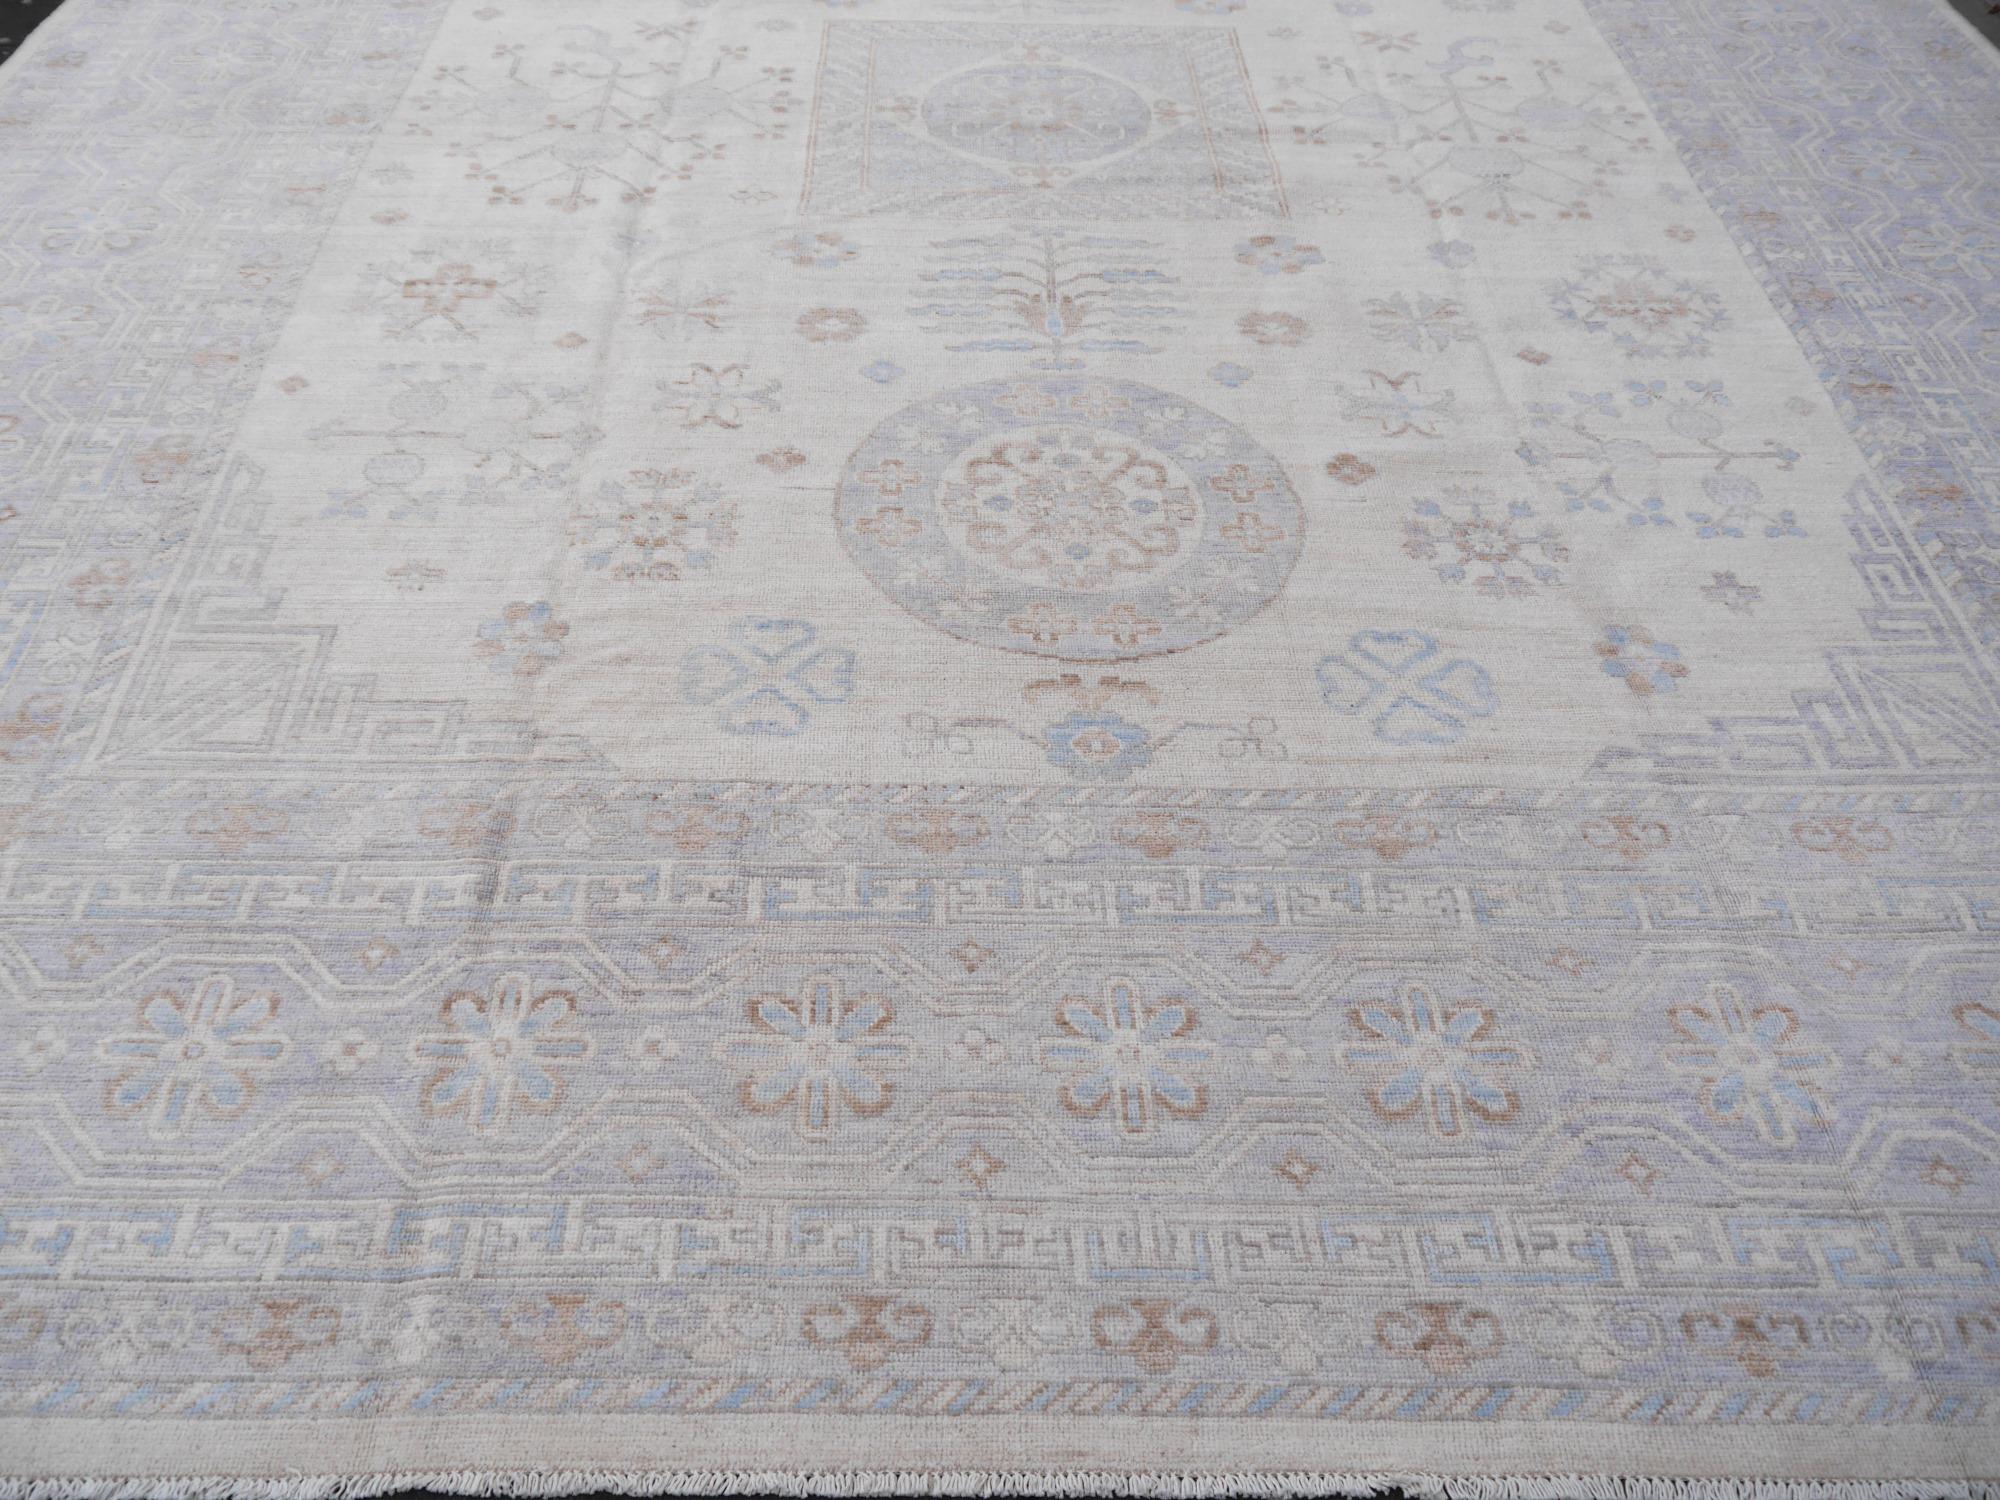 Large Samarkand Khotan Style Rug Hand Knotted Contemporary White Gray Oversized 10